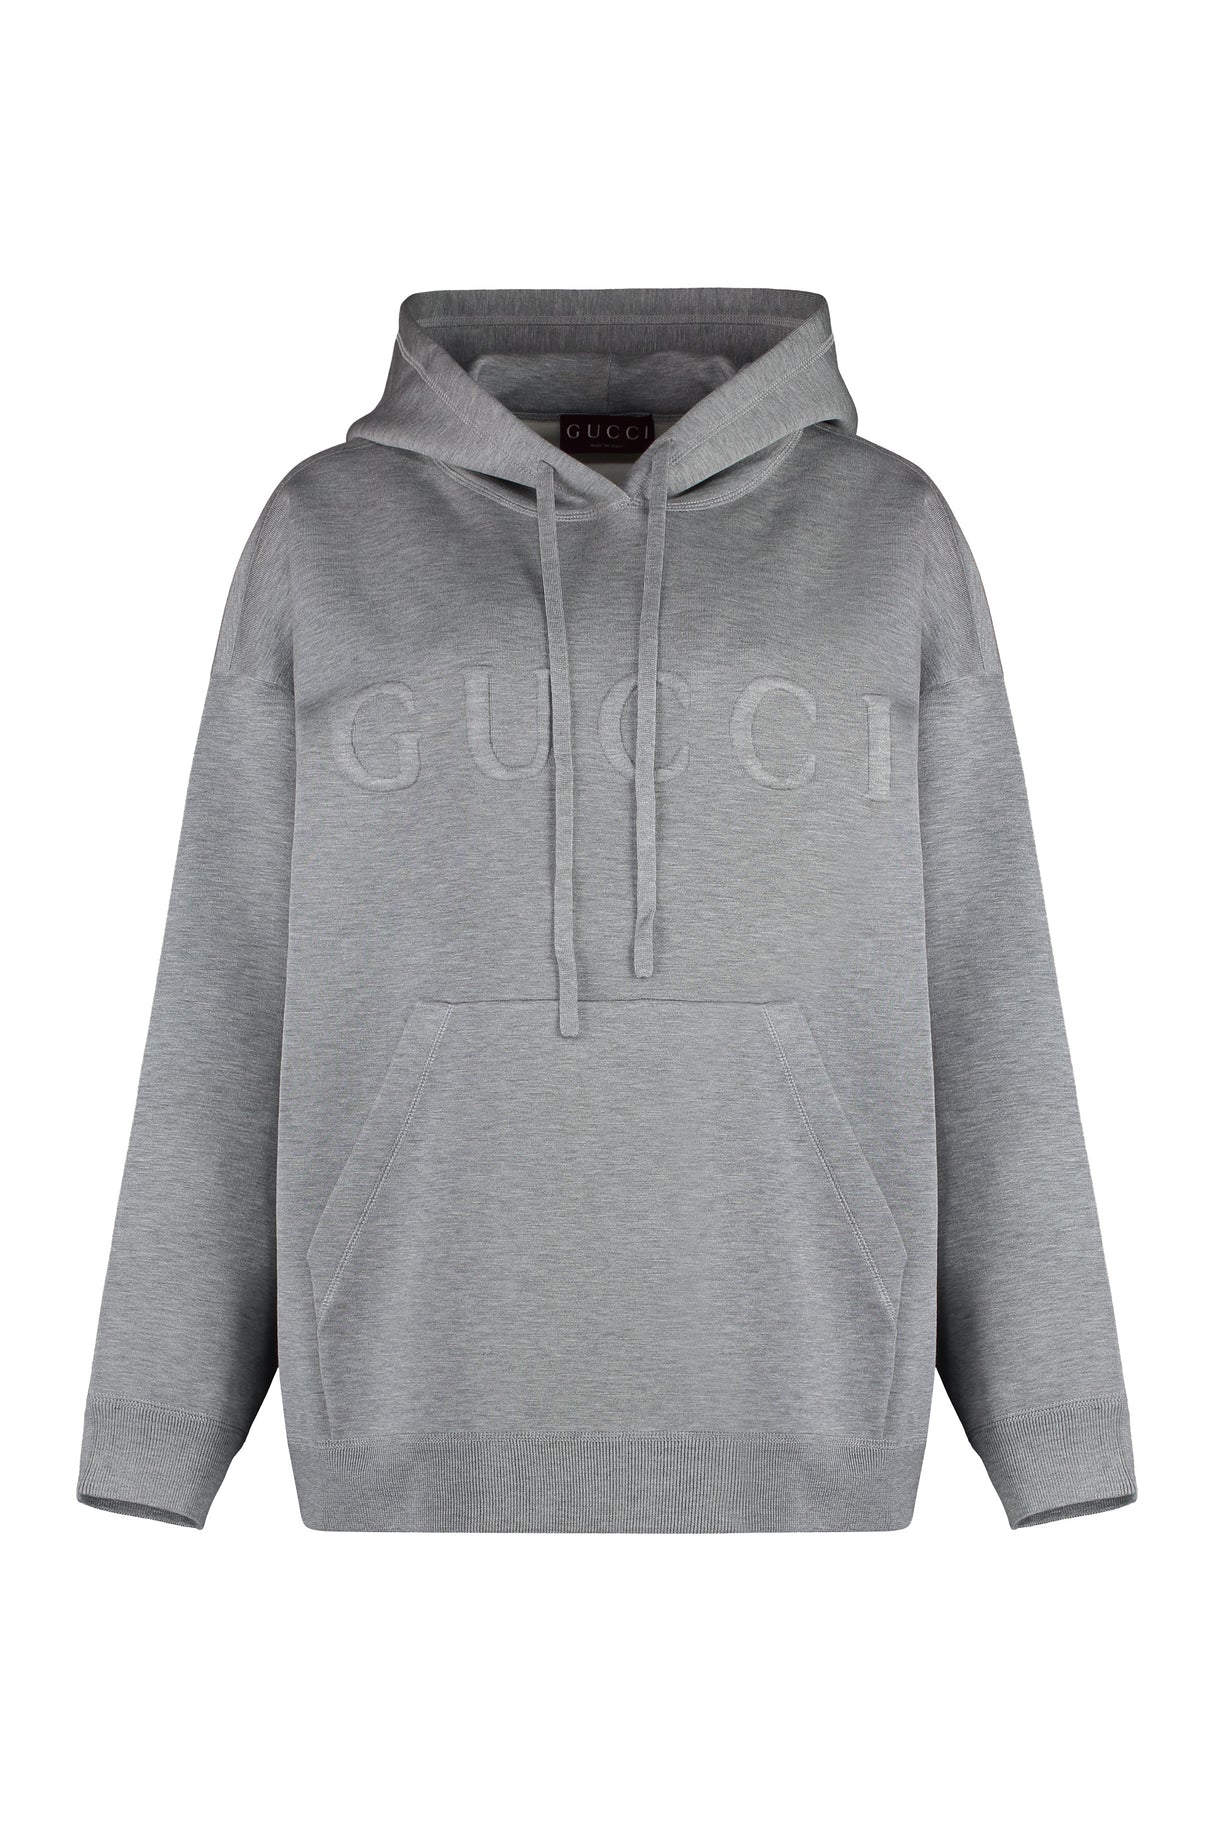 GUCCI Embossed Logo Hoodie for Women in Grey